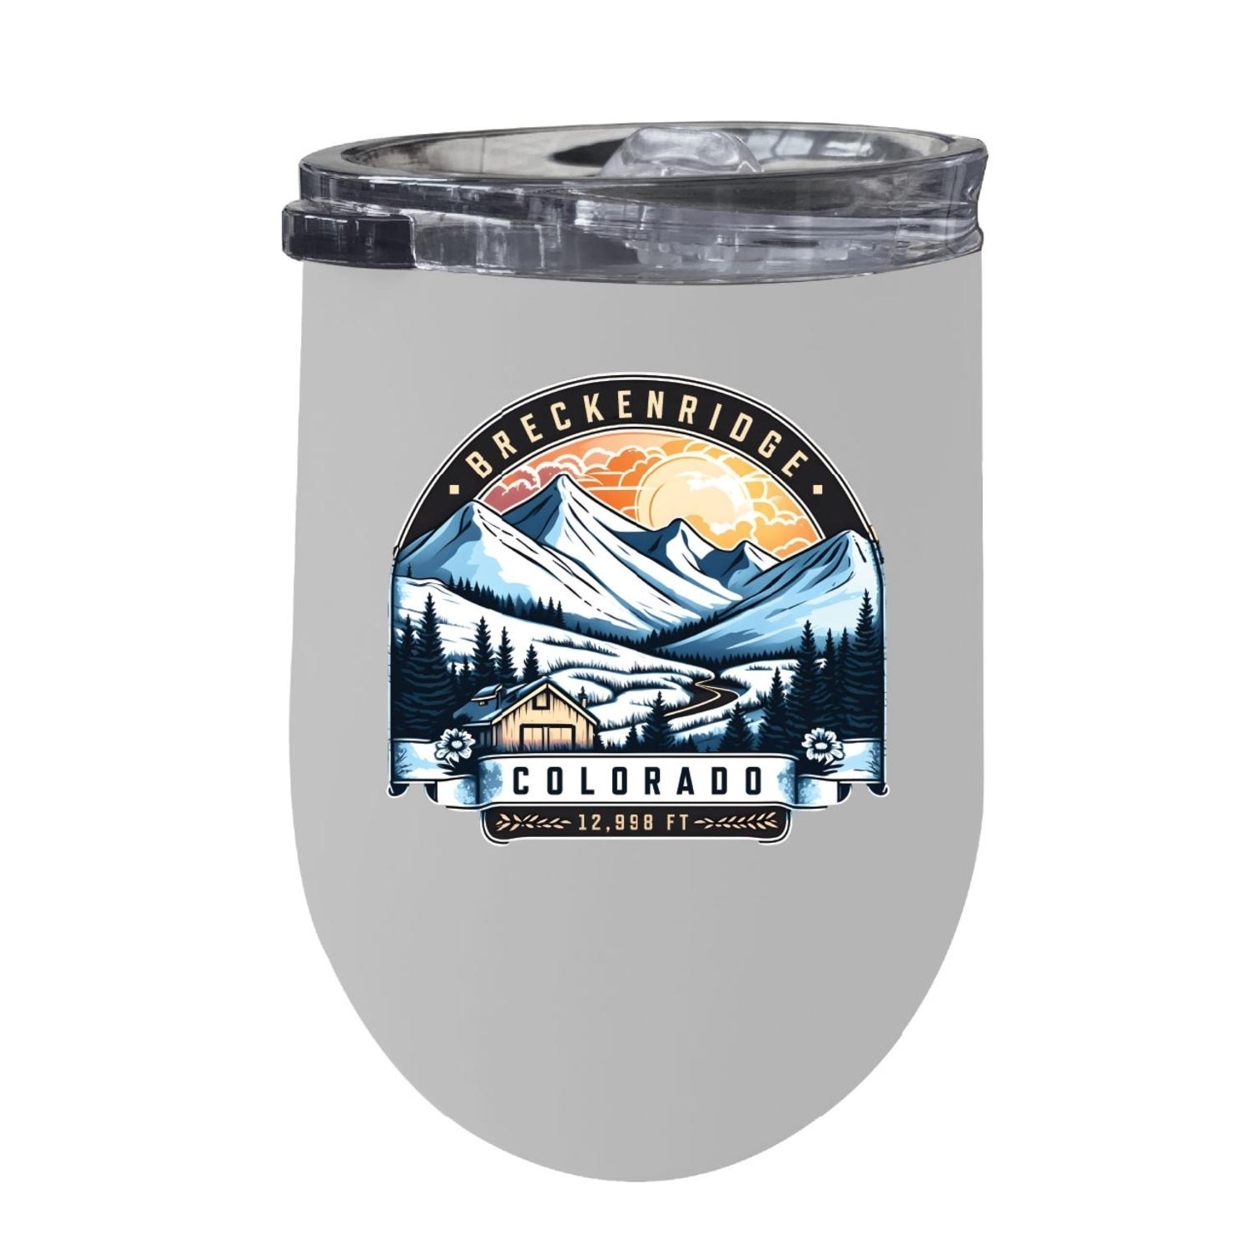 Breckenridge Colorado Souvenir 12 Oz Insulated Wine Stainless Steel Tumbler - White